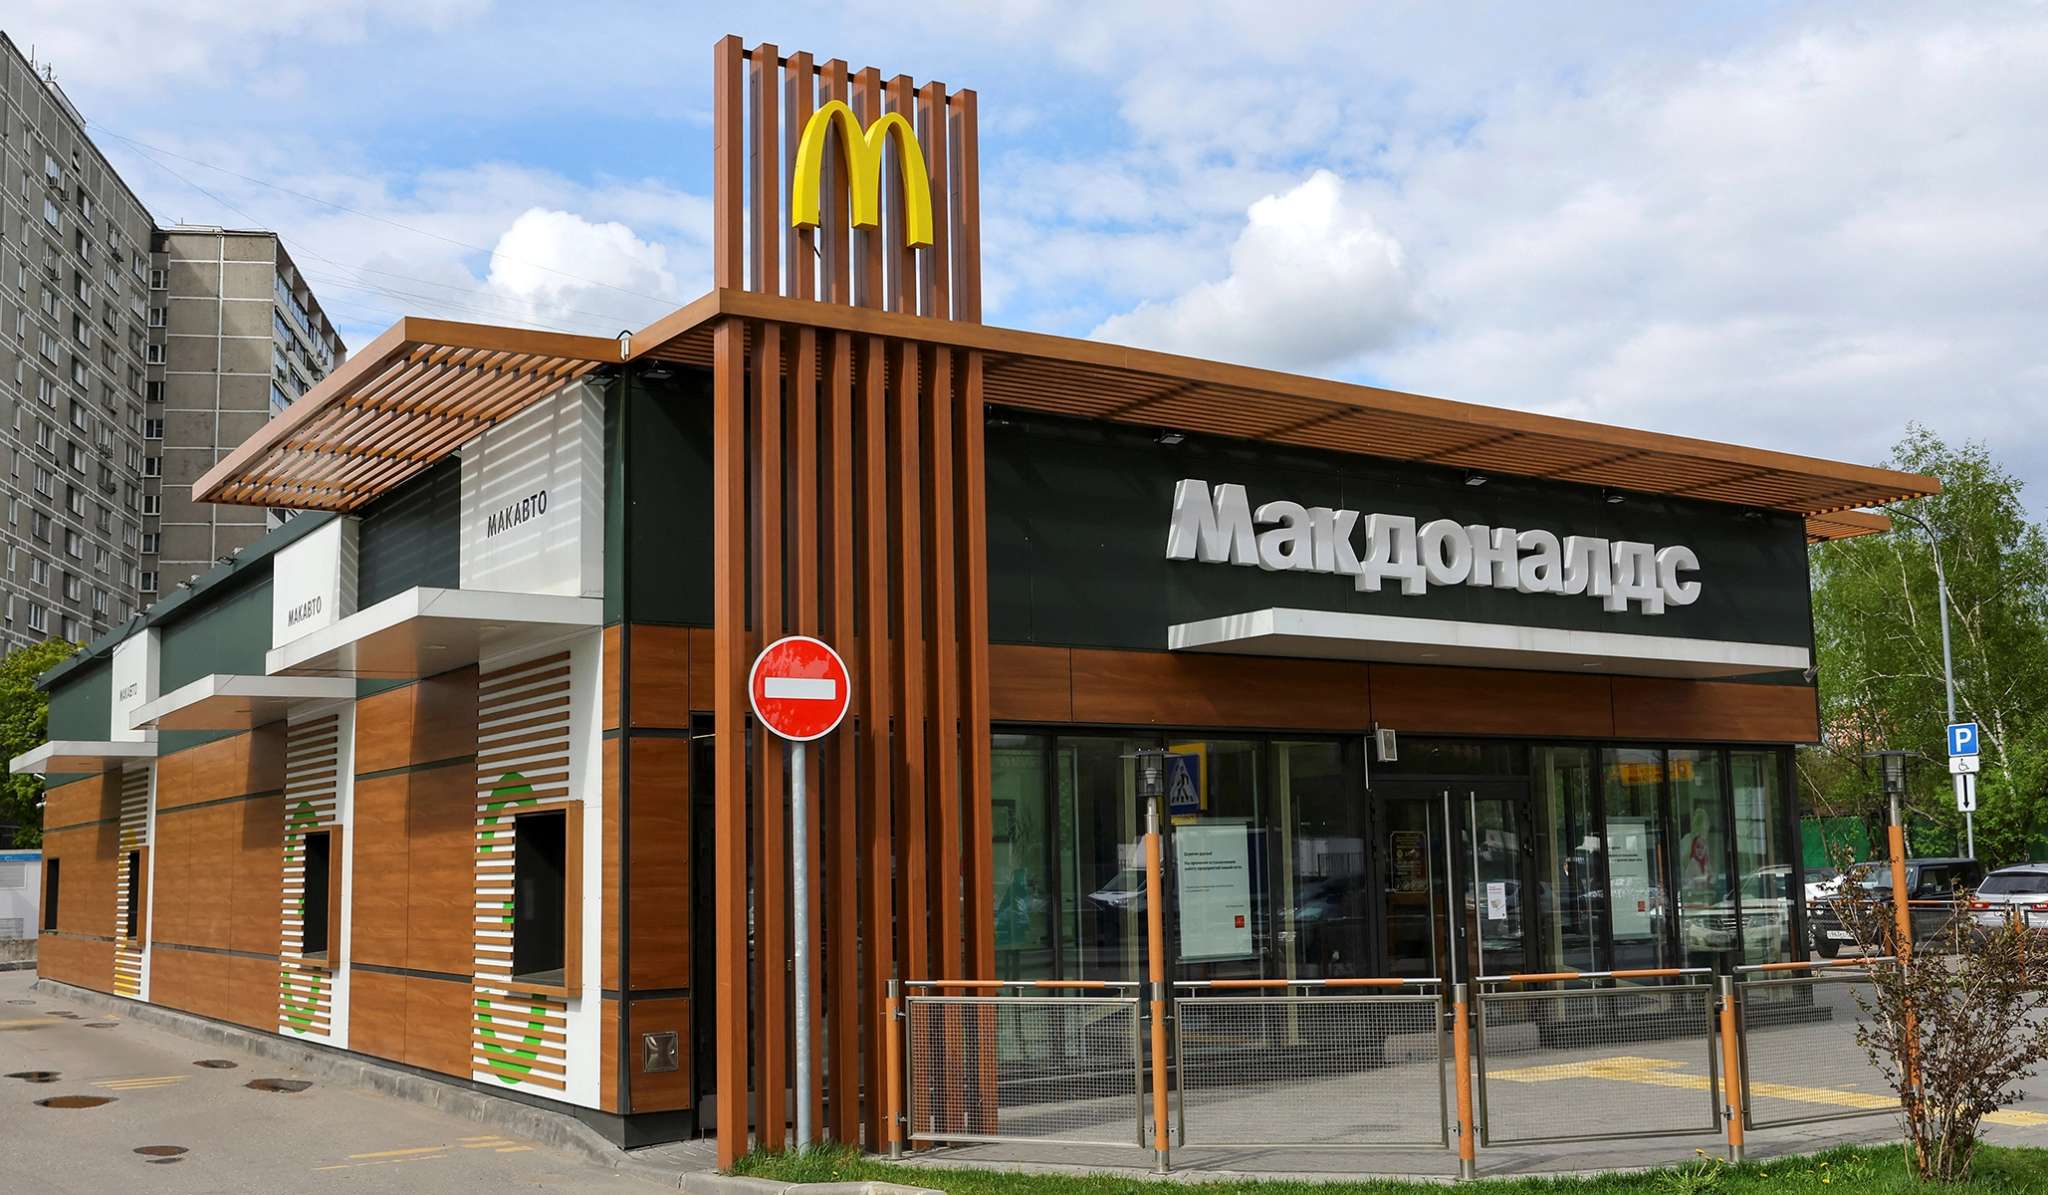 029 McDonald's Russia.jpg